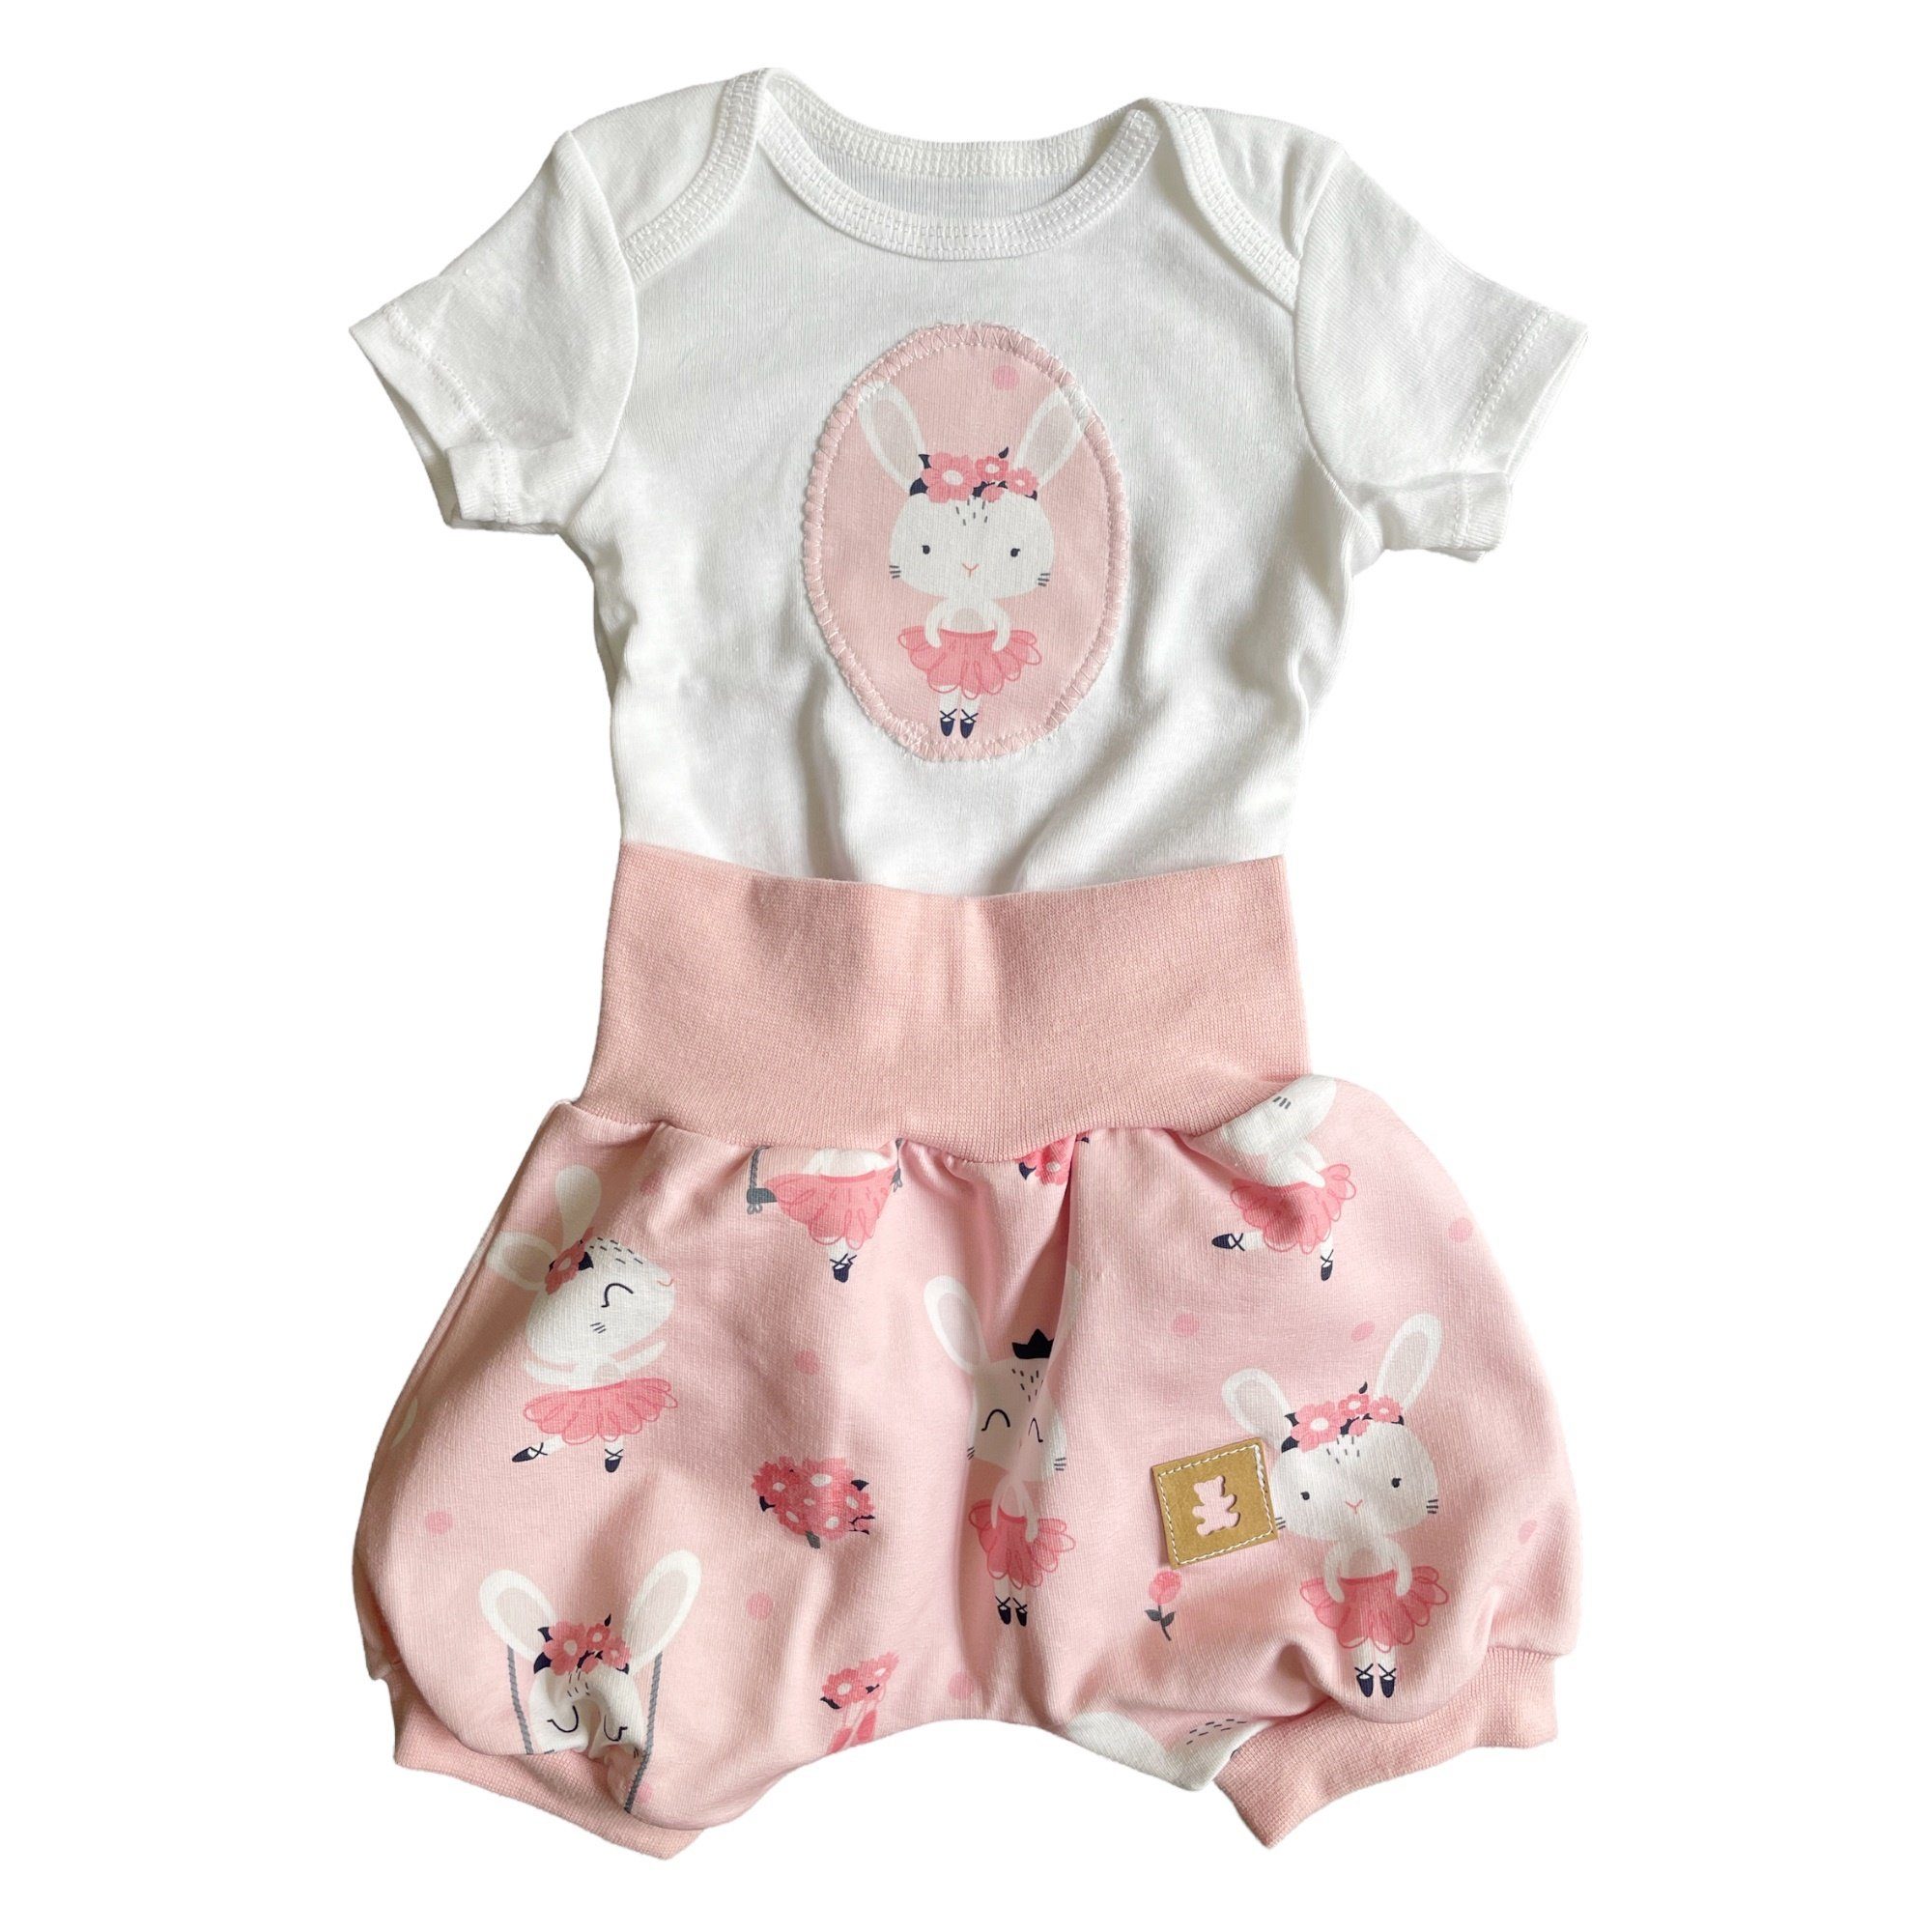 kennydoo Body & Shorts Kinder- Baby Set "Hasenmädchen rosa" (2 teilig) mit niedlichem Design